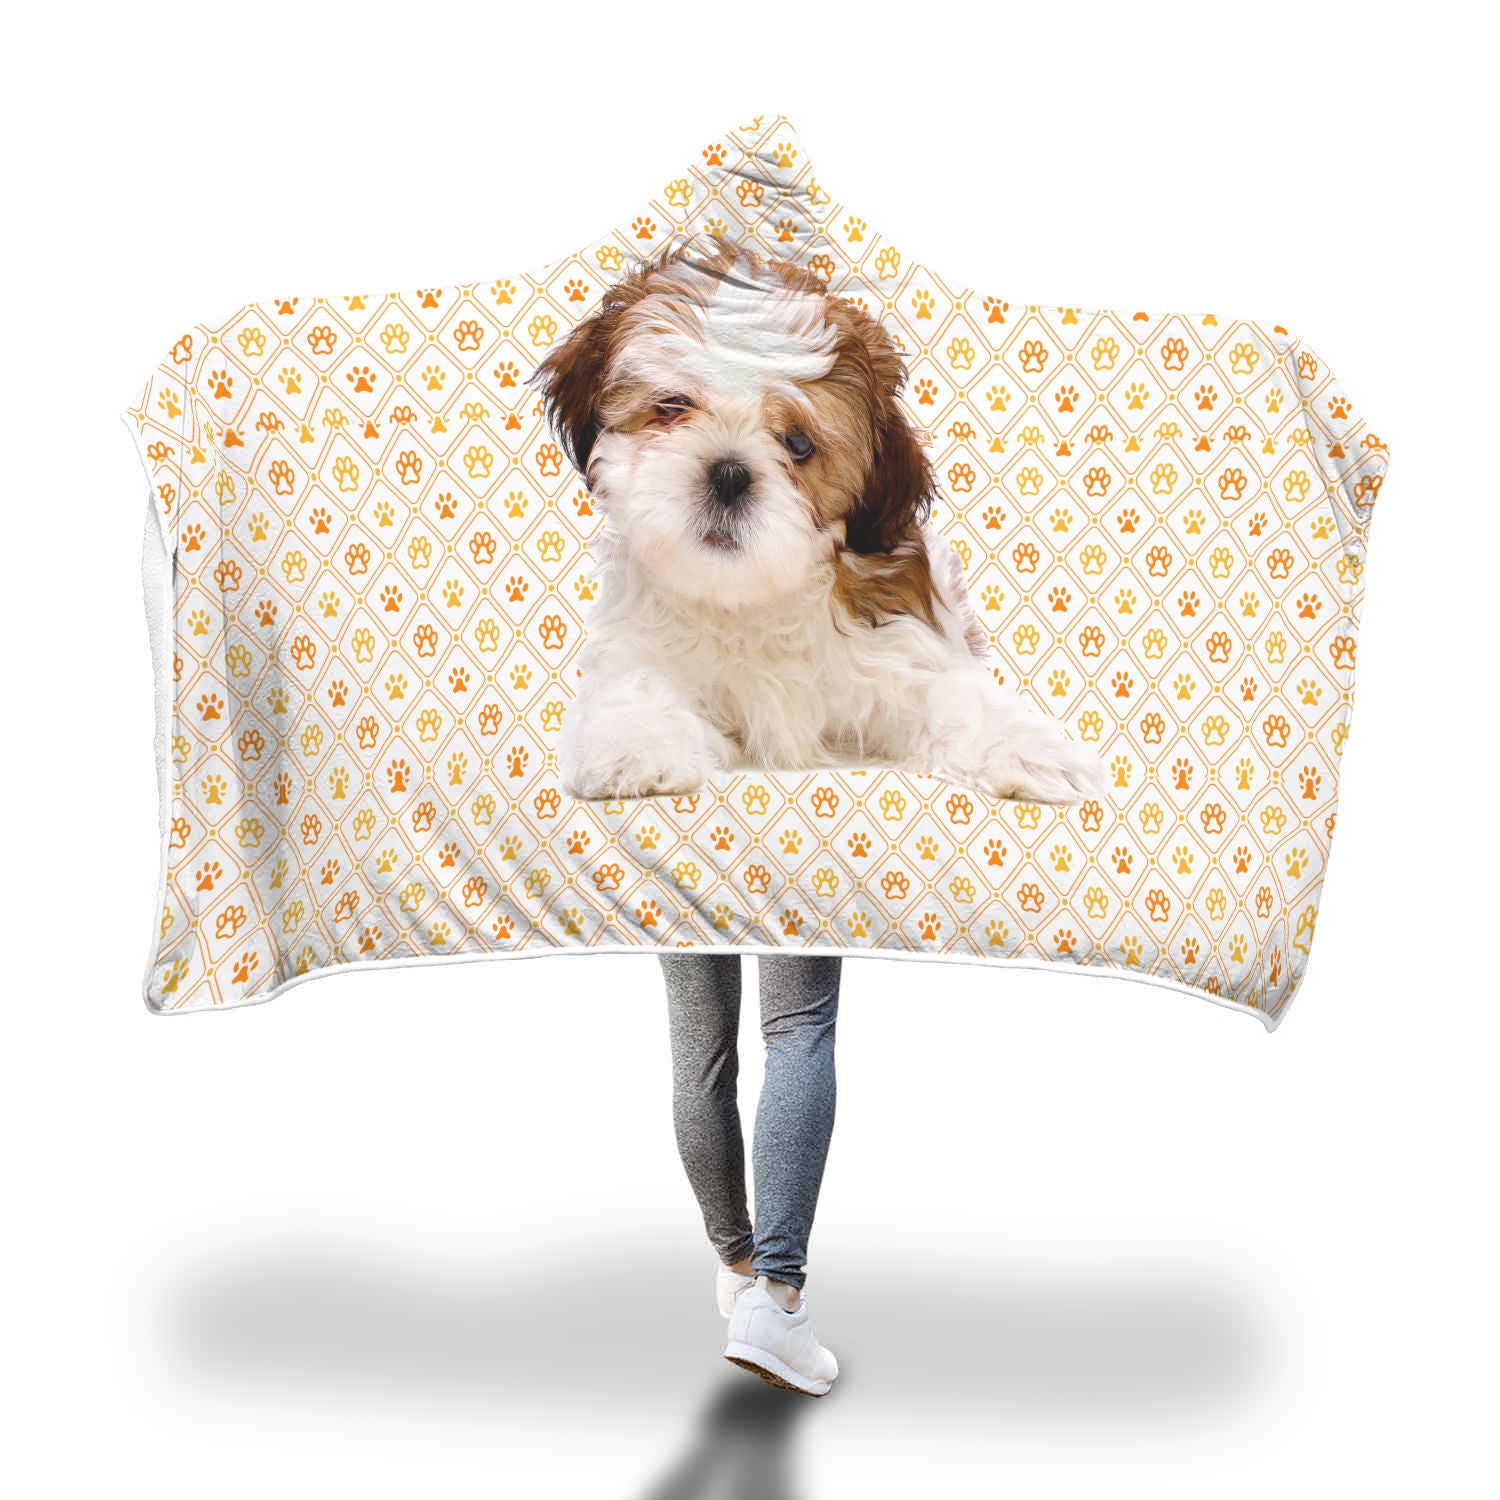 Shih Tzu Hooded Blanket - Puppy